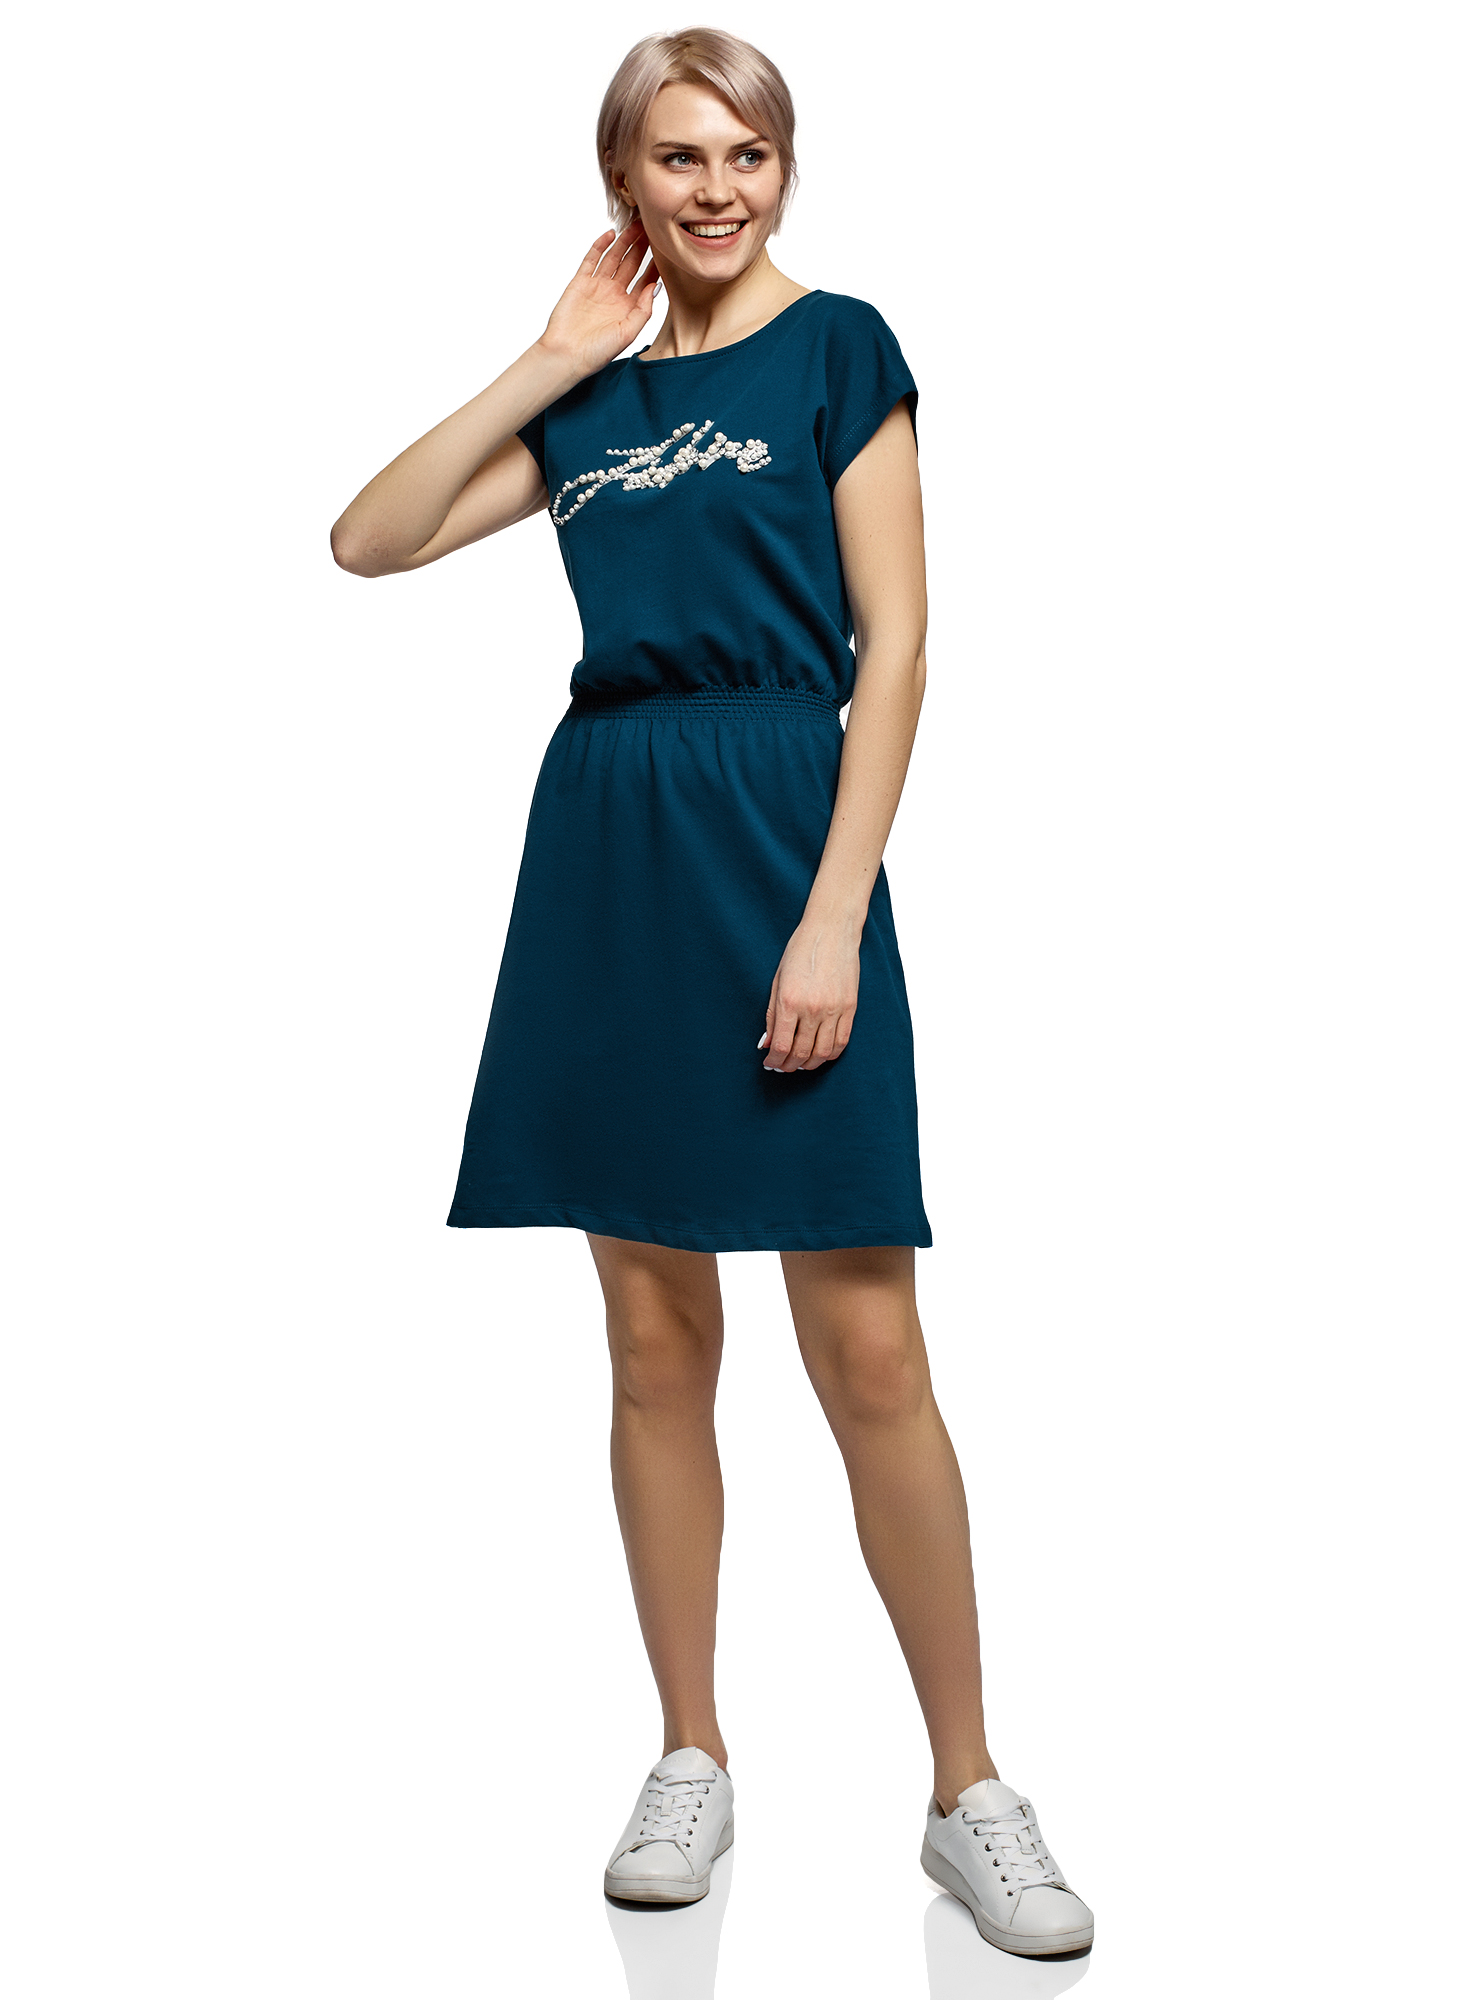 Платье женское oodji 14008021-8 синее S